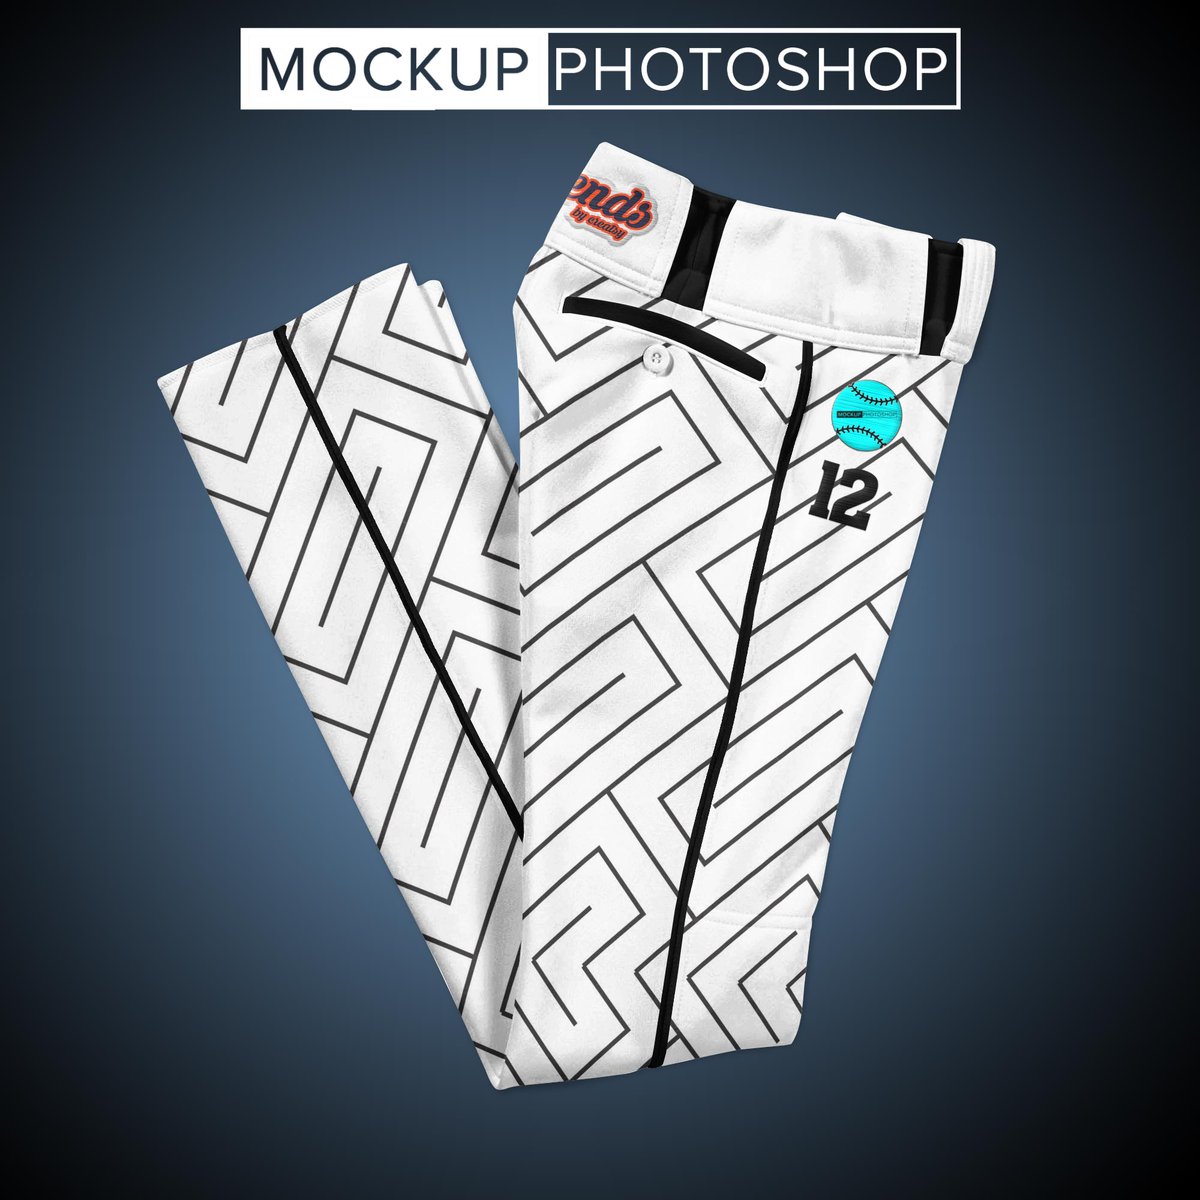 Free Folded Trouser Mockups
tinyurl.com/y5ccszrb
#ProductsMockup